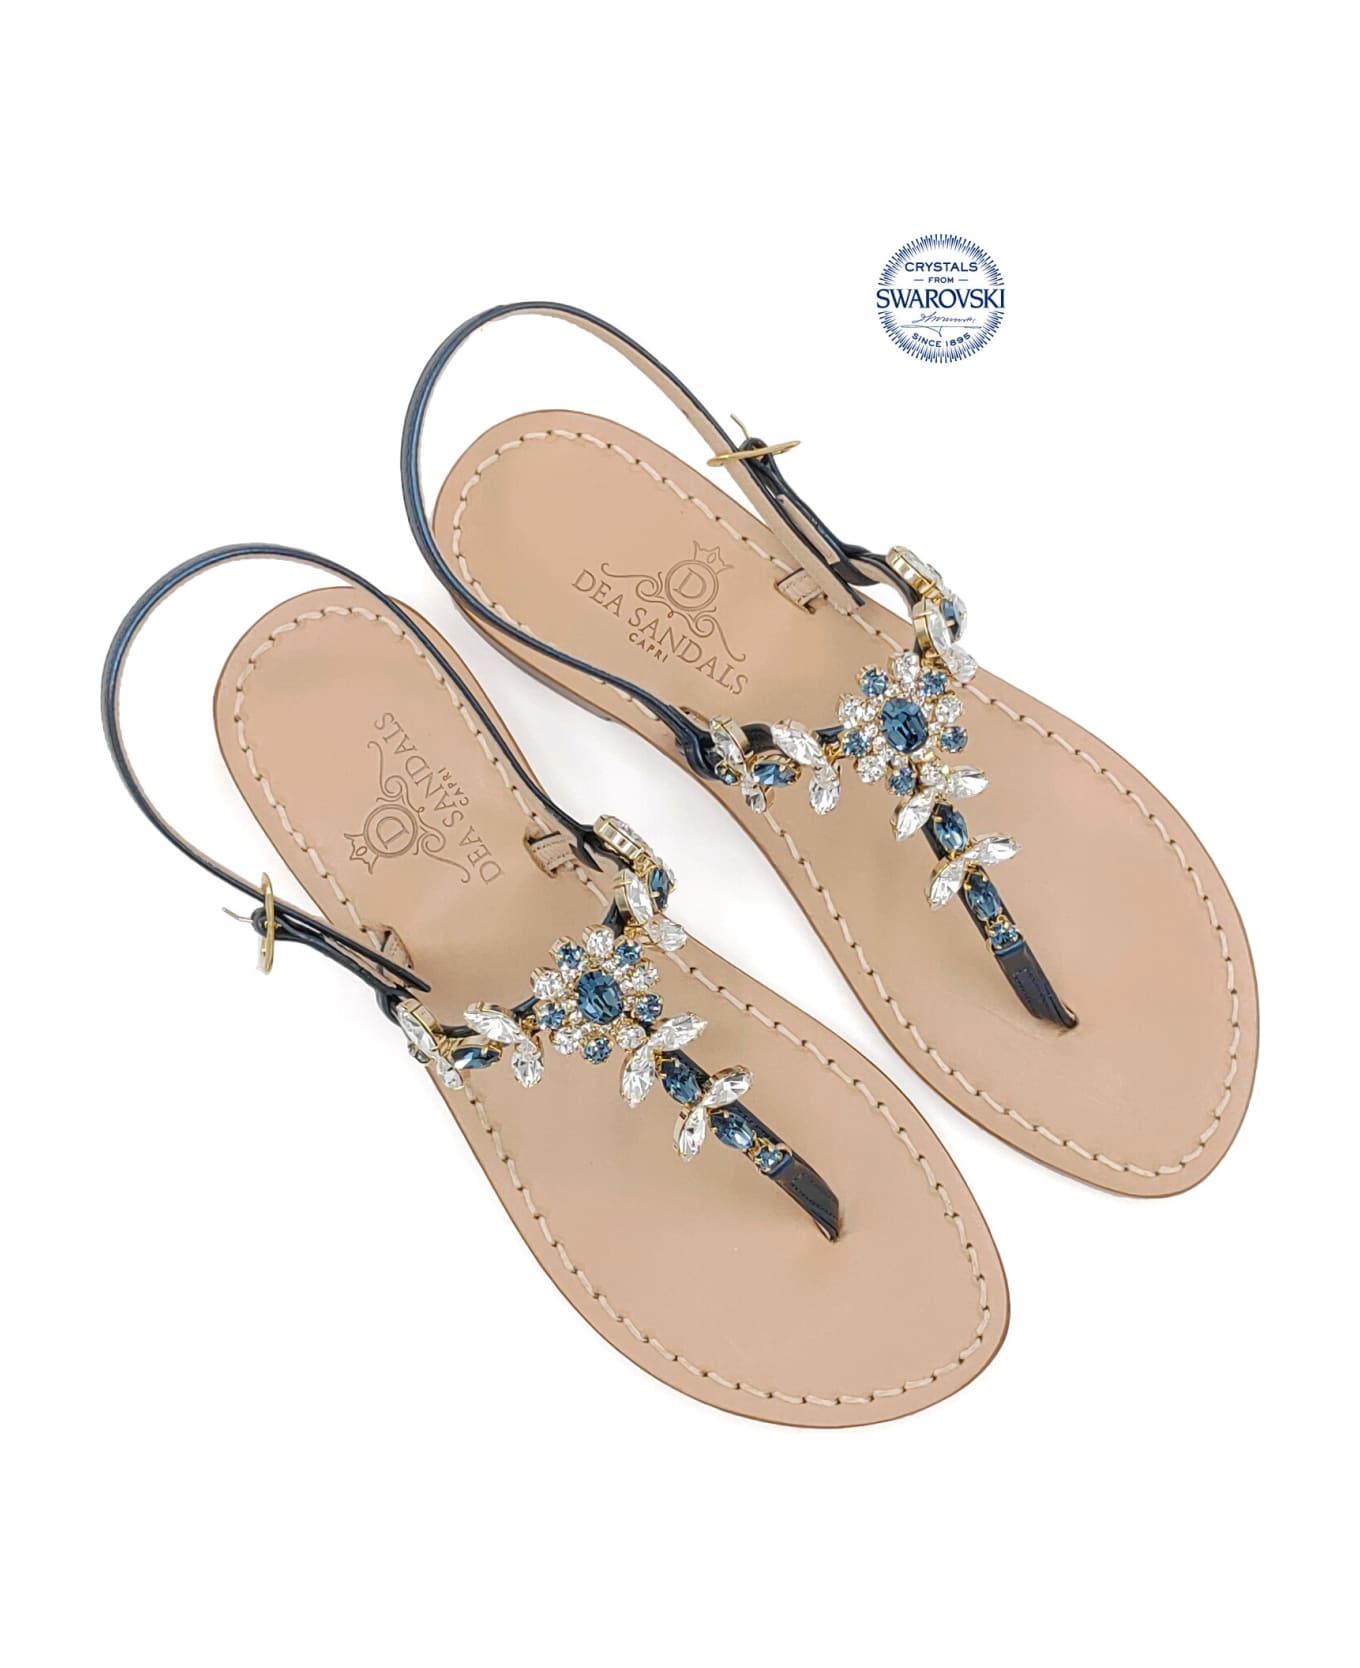 Dea Sandals Marina Grande Flip Flops Thong Sandals - navy blue, crystal